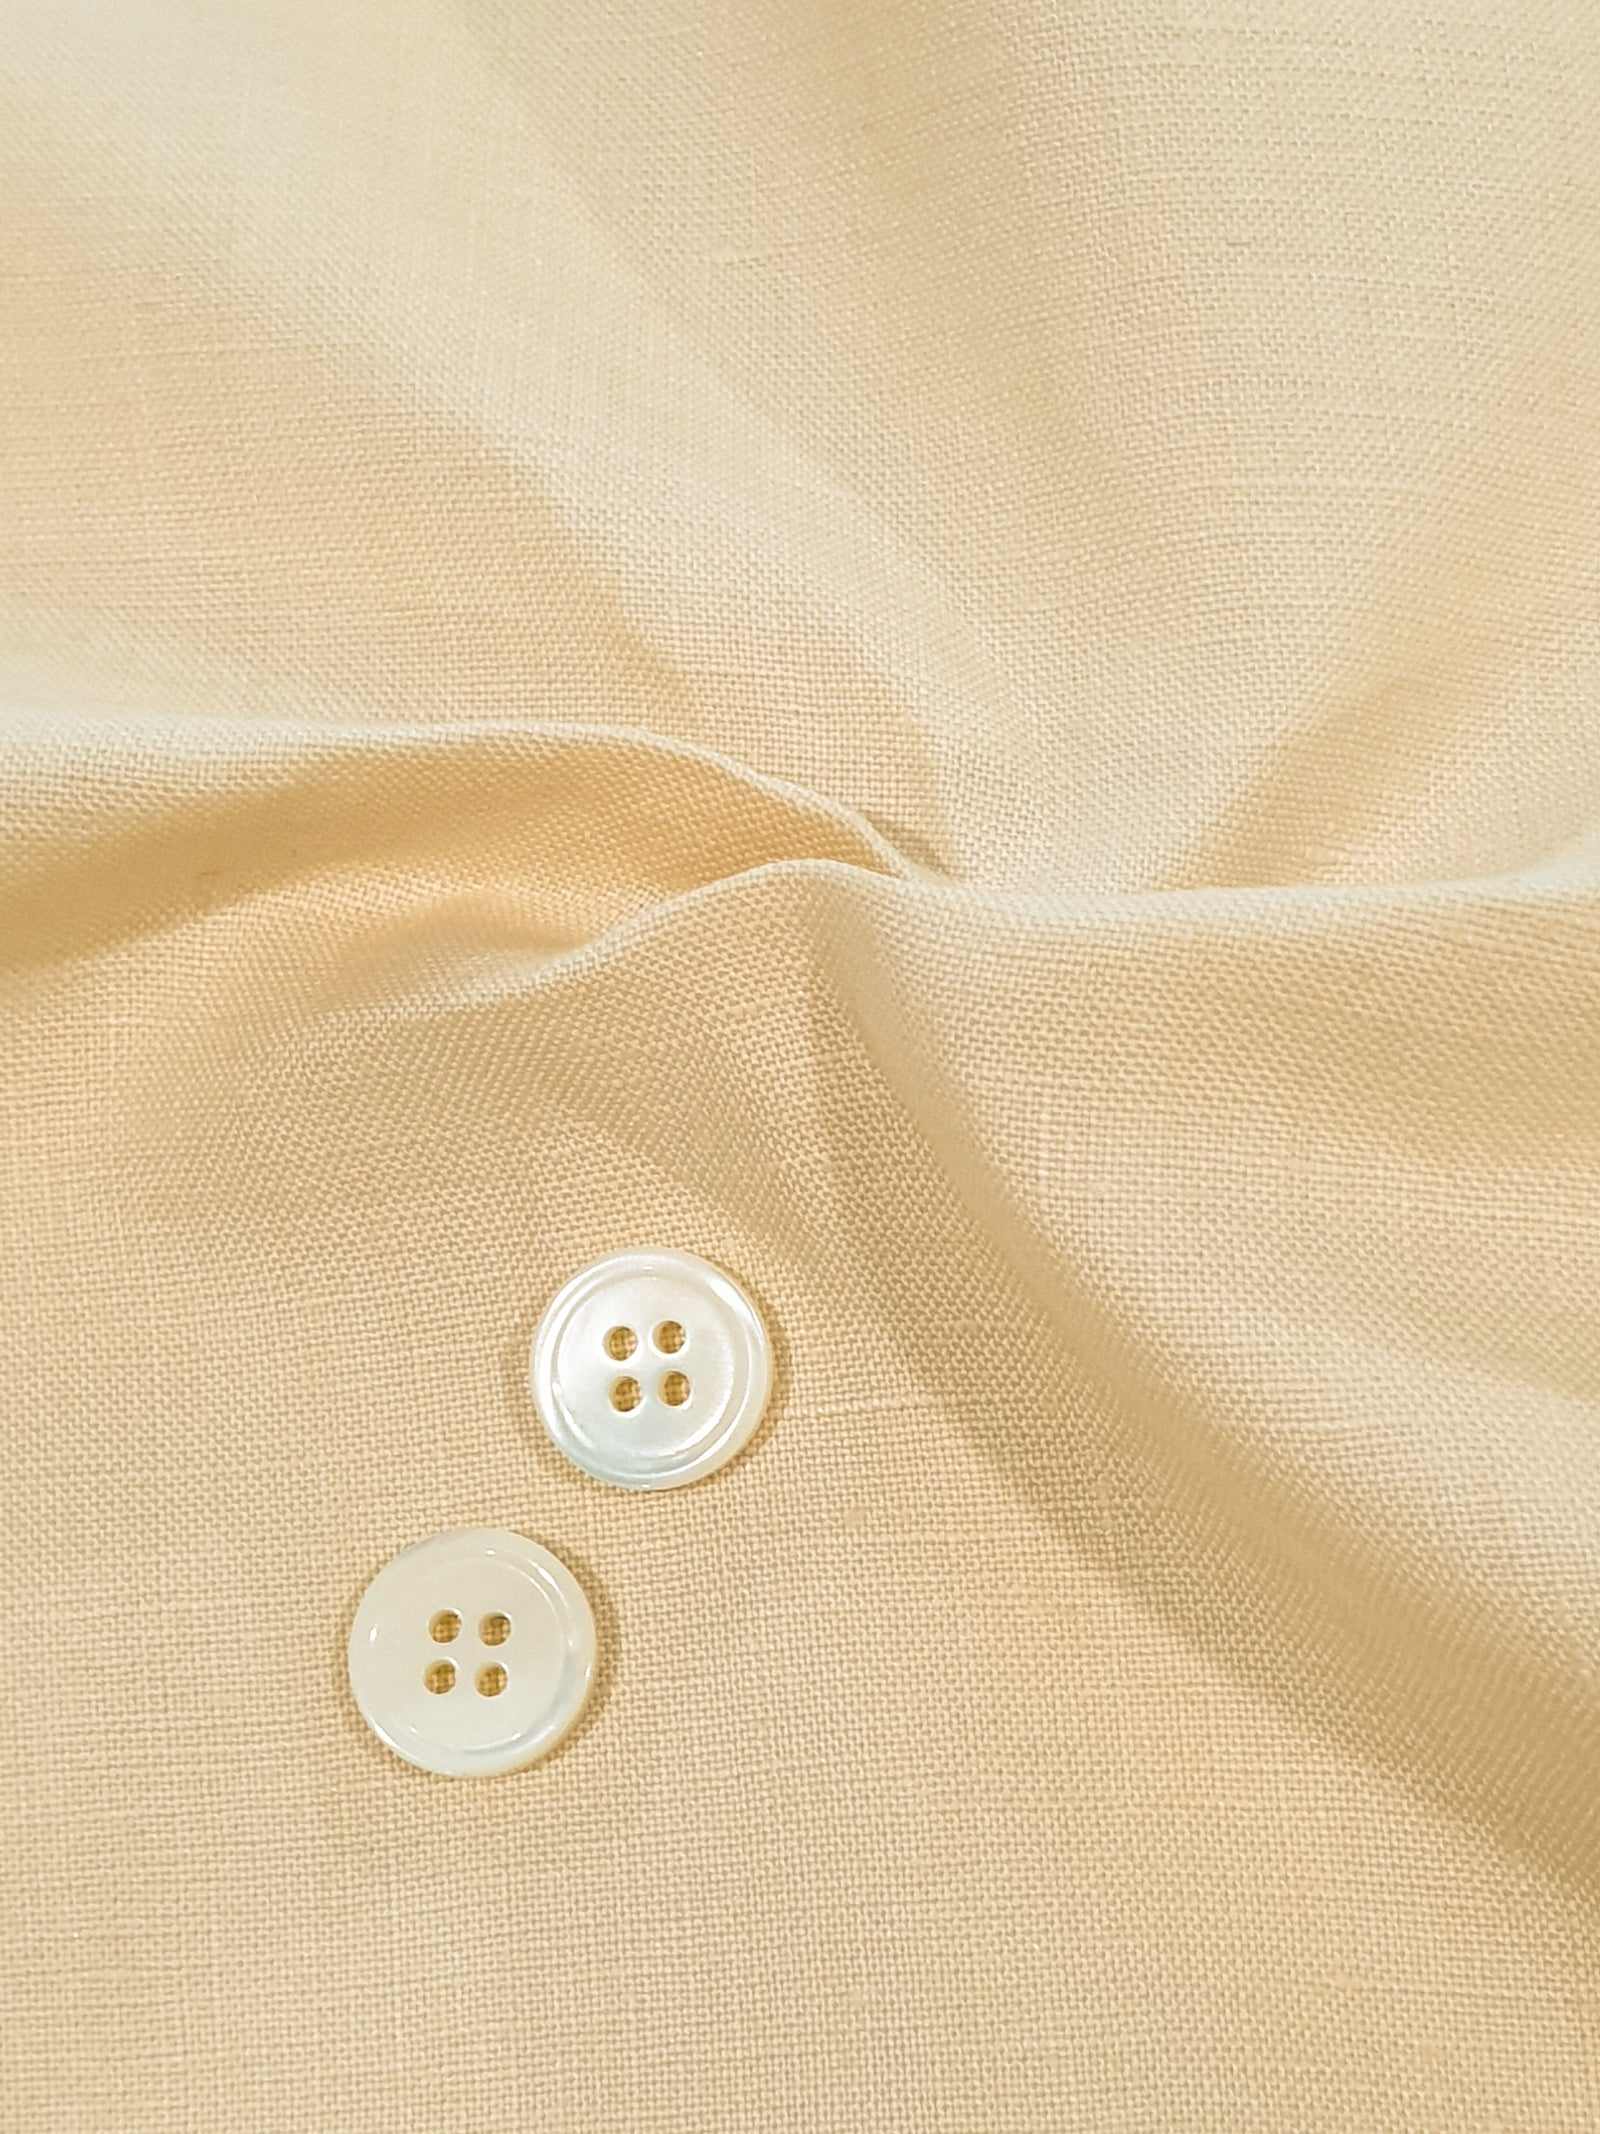 950.061 Cream Irish Linen Suiting Fabrics